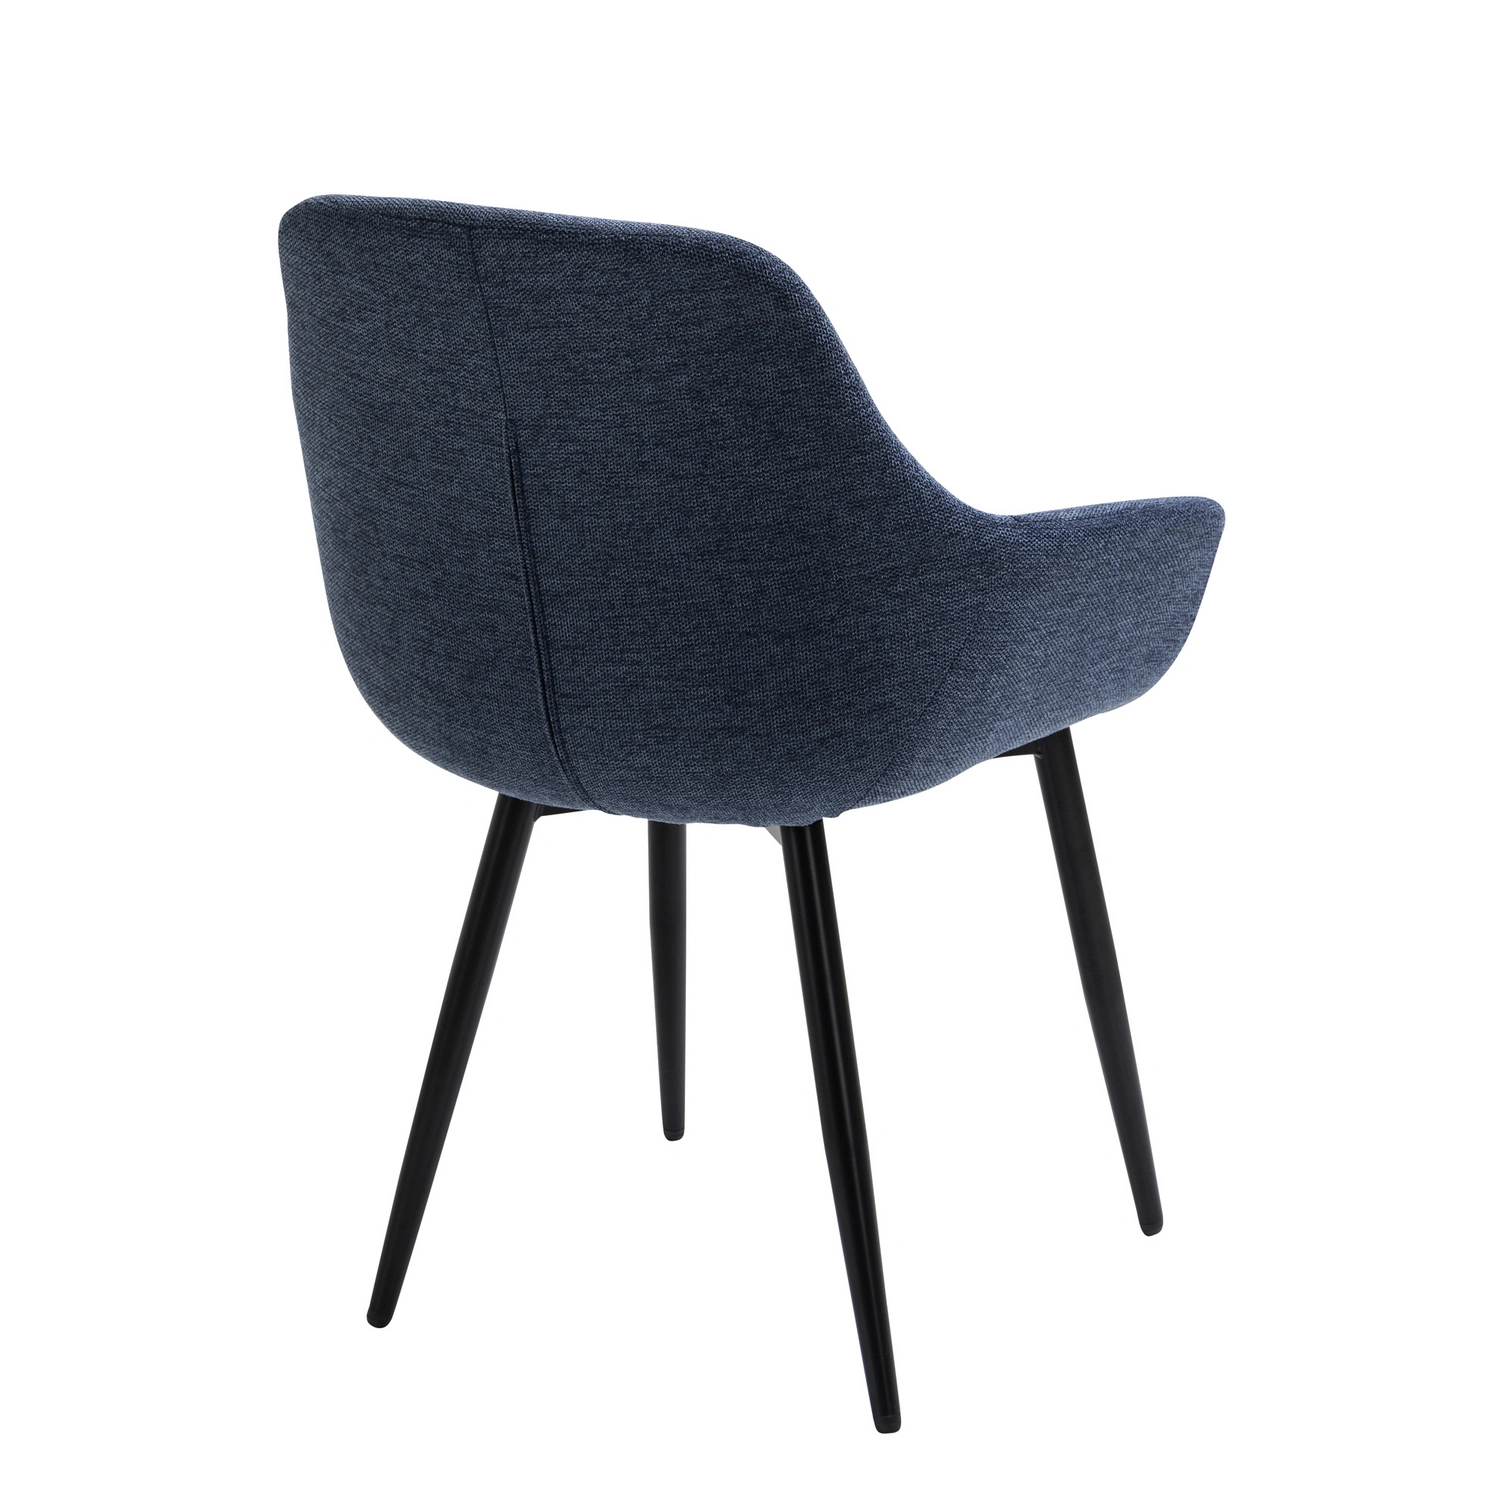 stk 2 SalesFever dunkelblau/schwarz, Stuhl, 86 cm, Höhe: